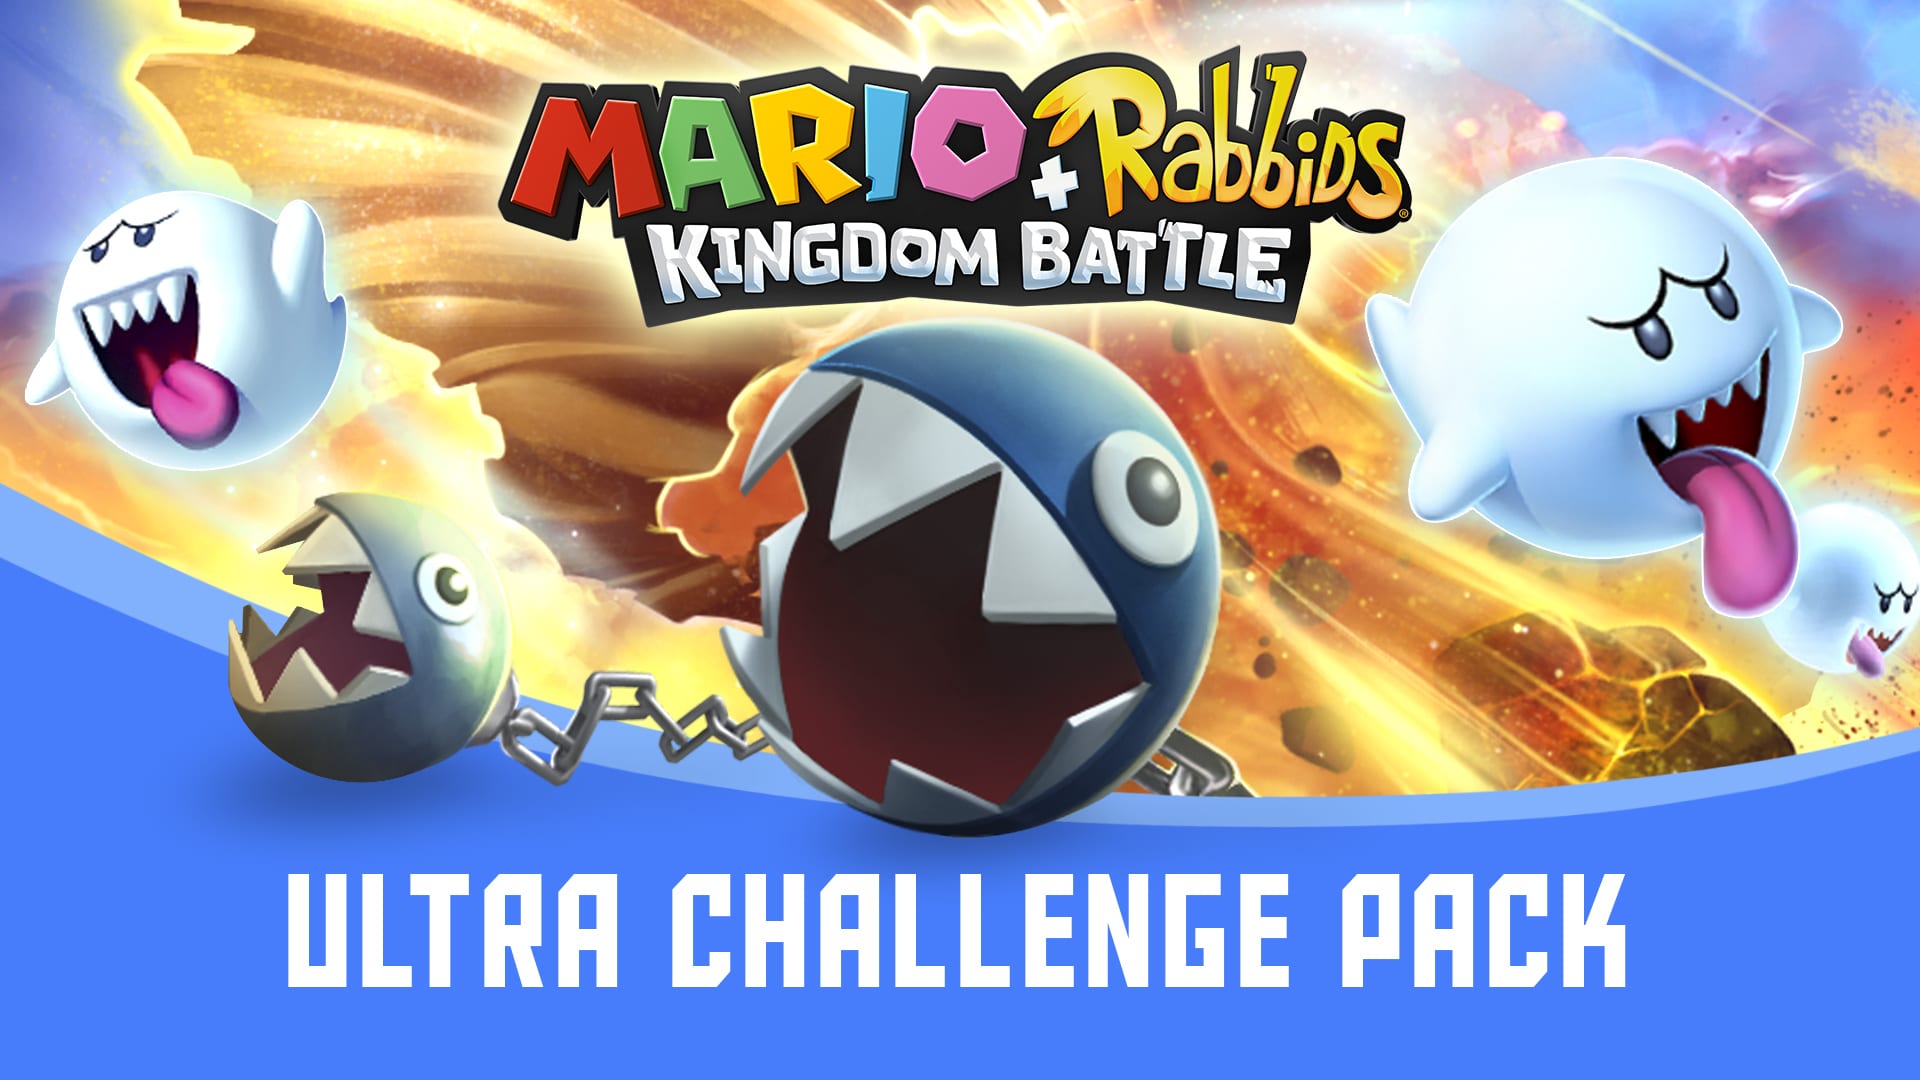 Mario + Rabbids Kingdom Battle Ultra Challenge Pack